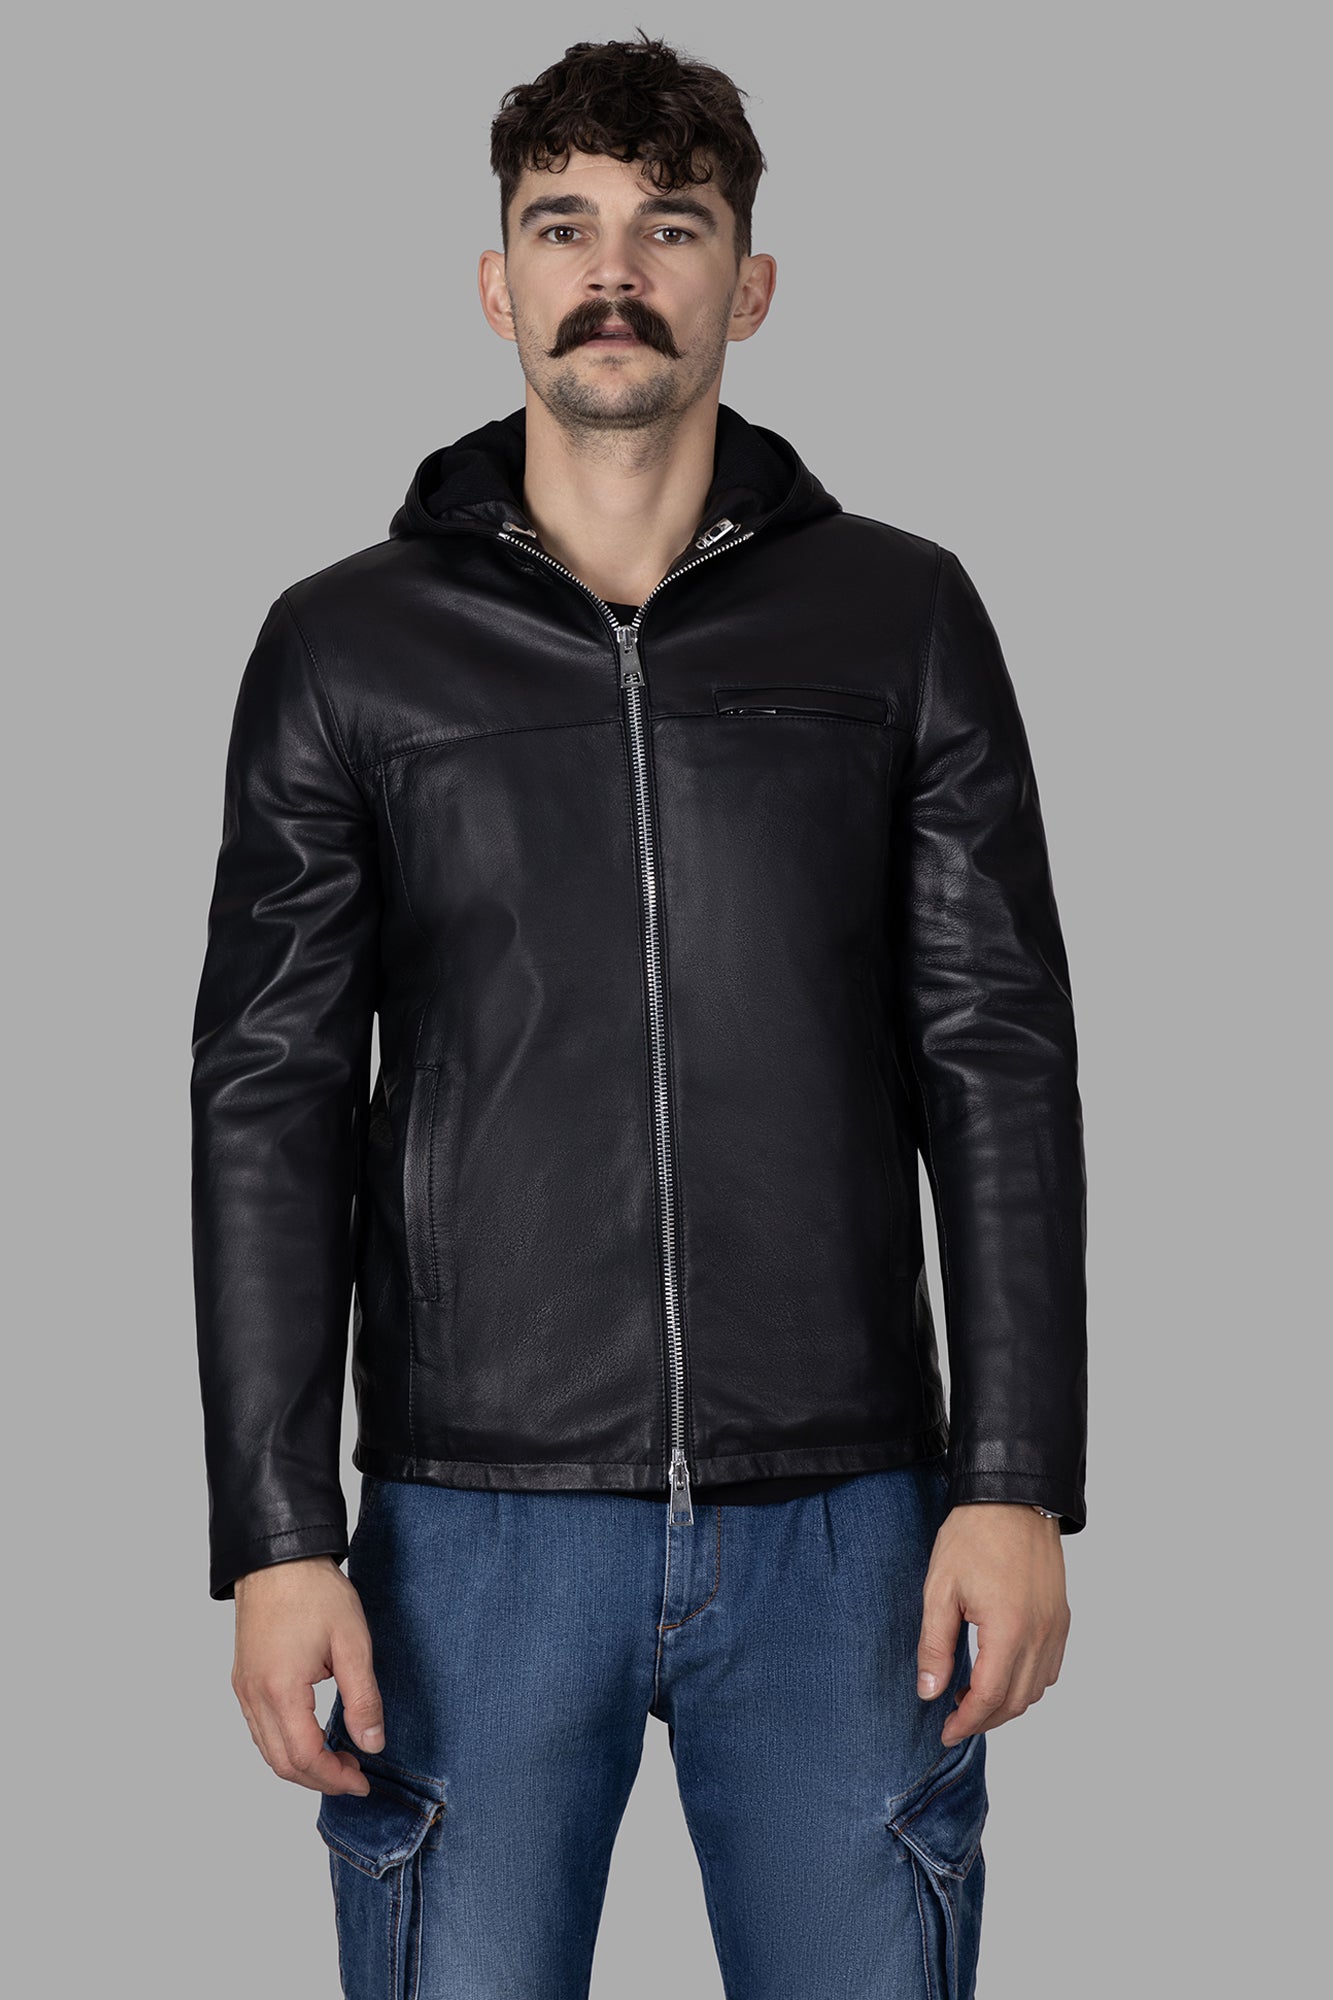 Hooded Leather Jacket